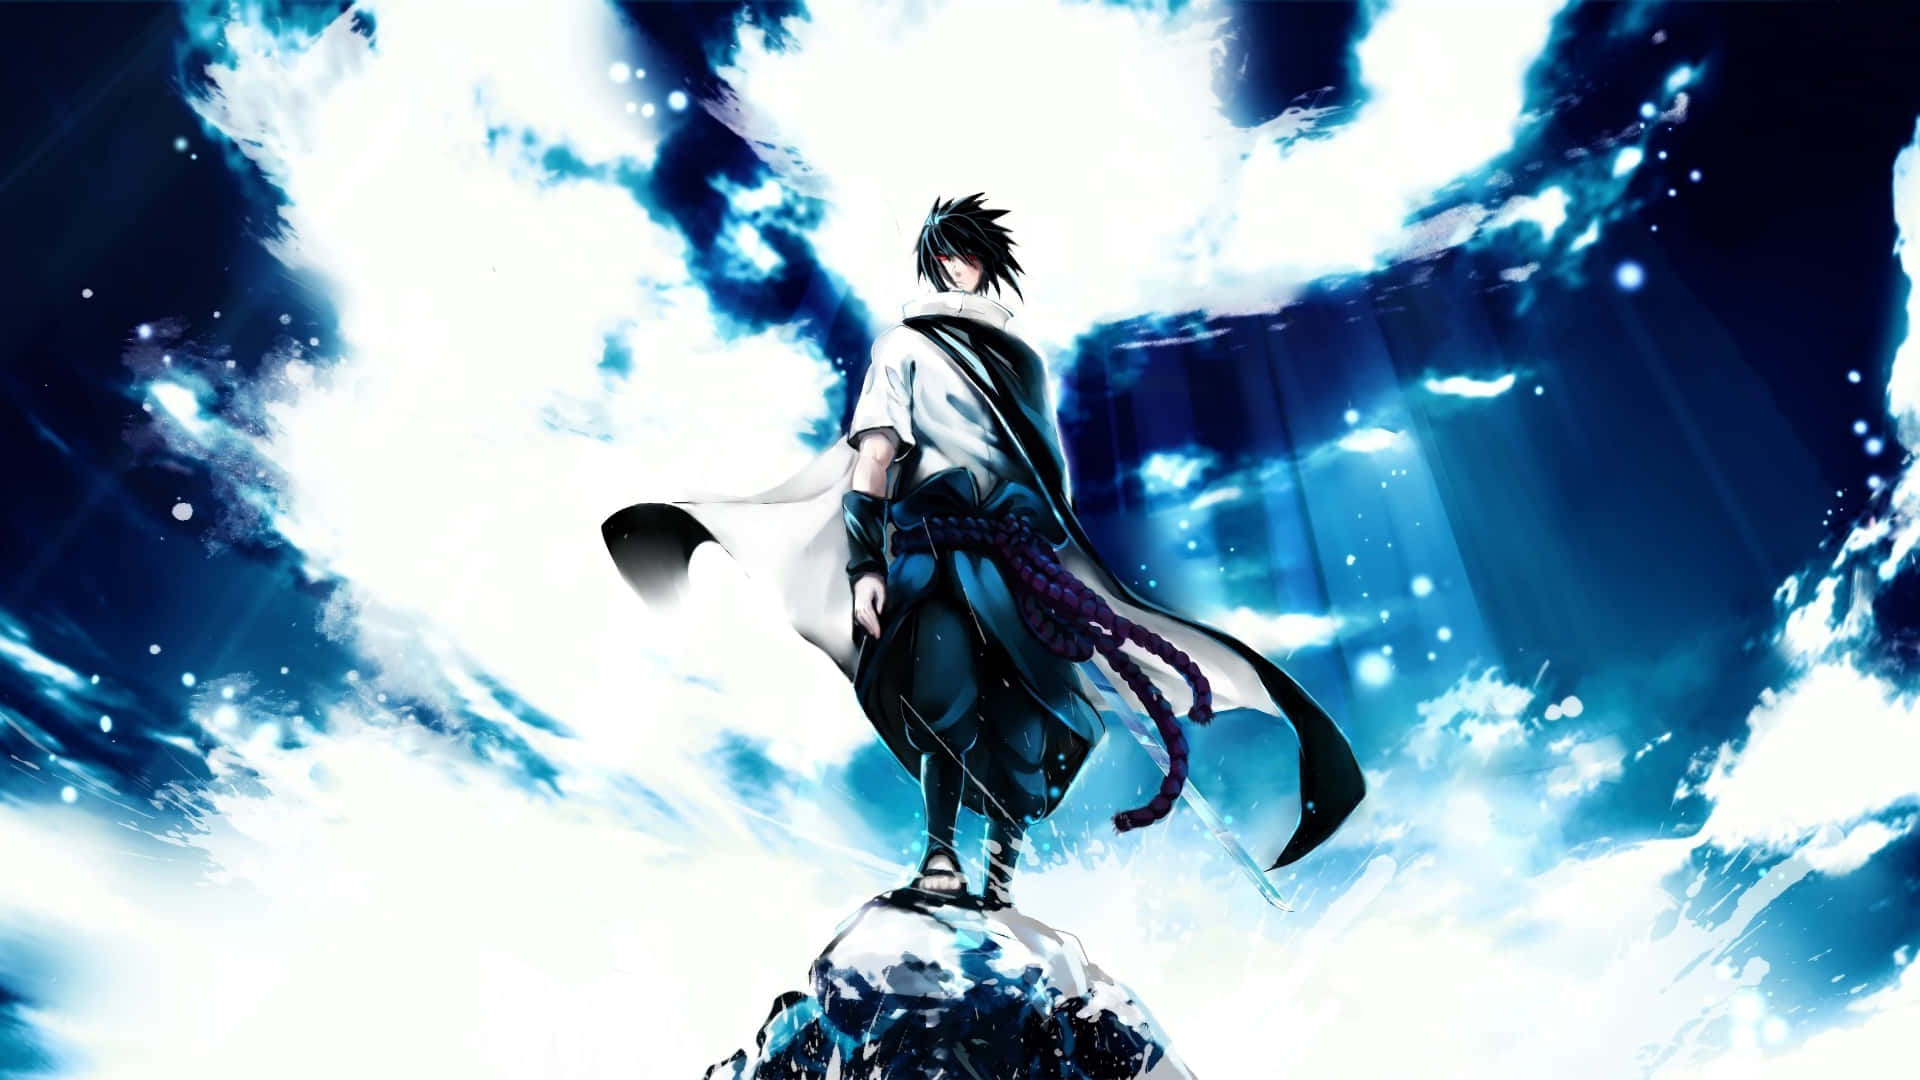 “Blue Sasuke Bringing Balance and Peace“ Wallpaper